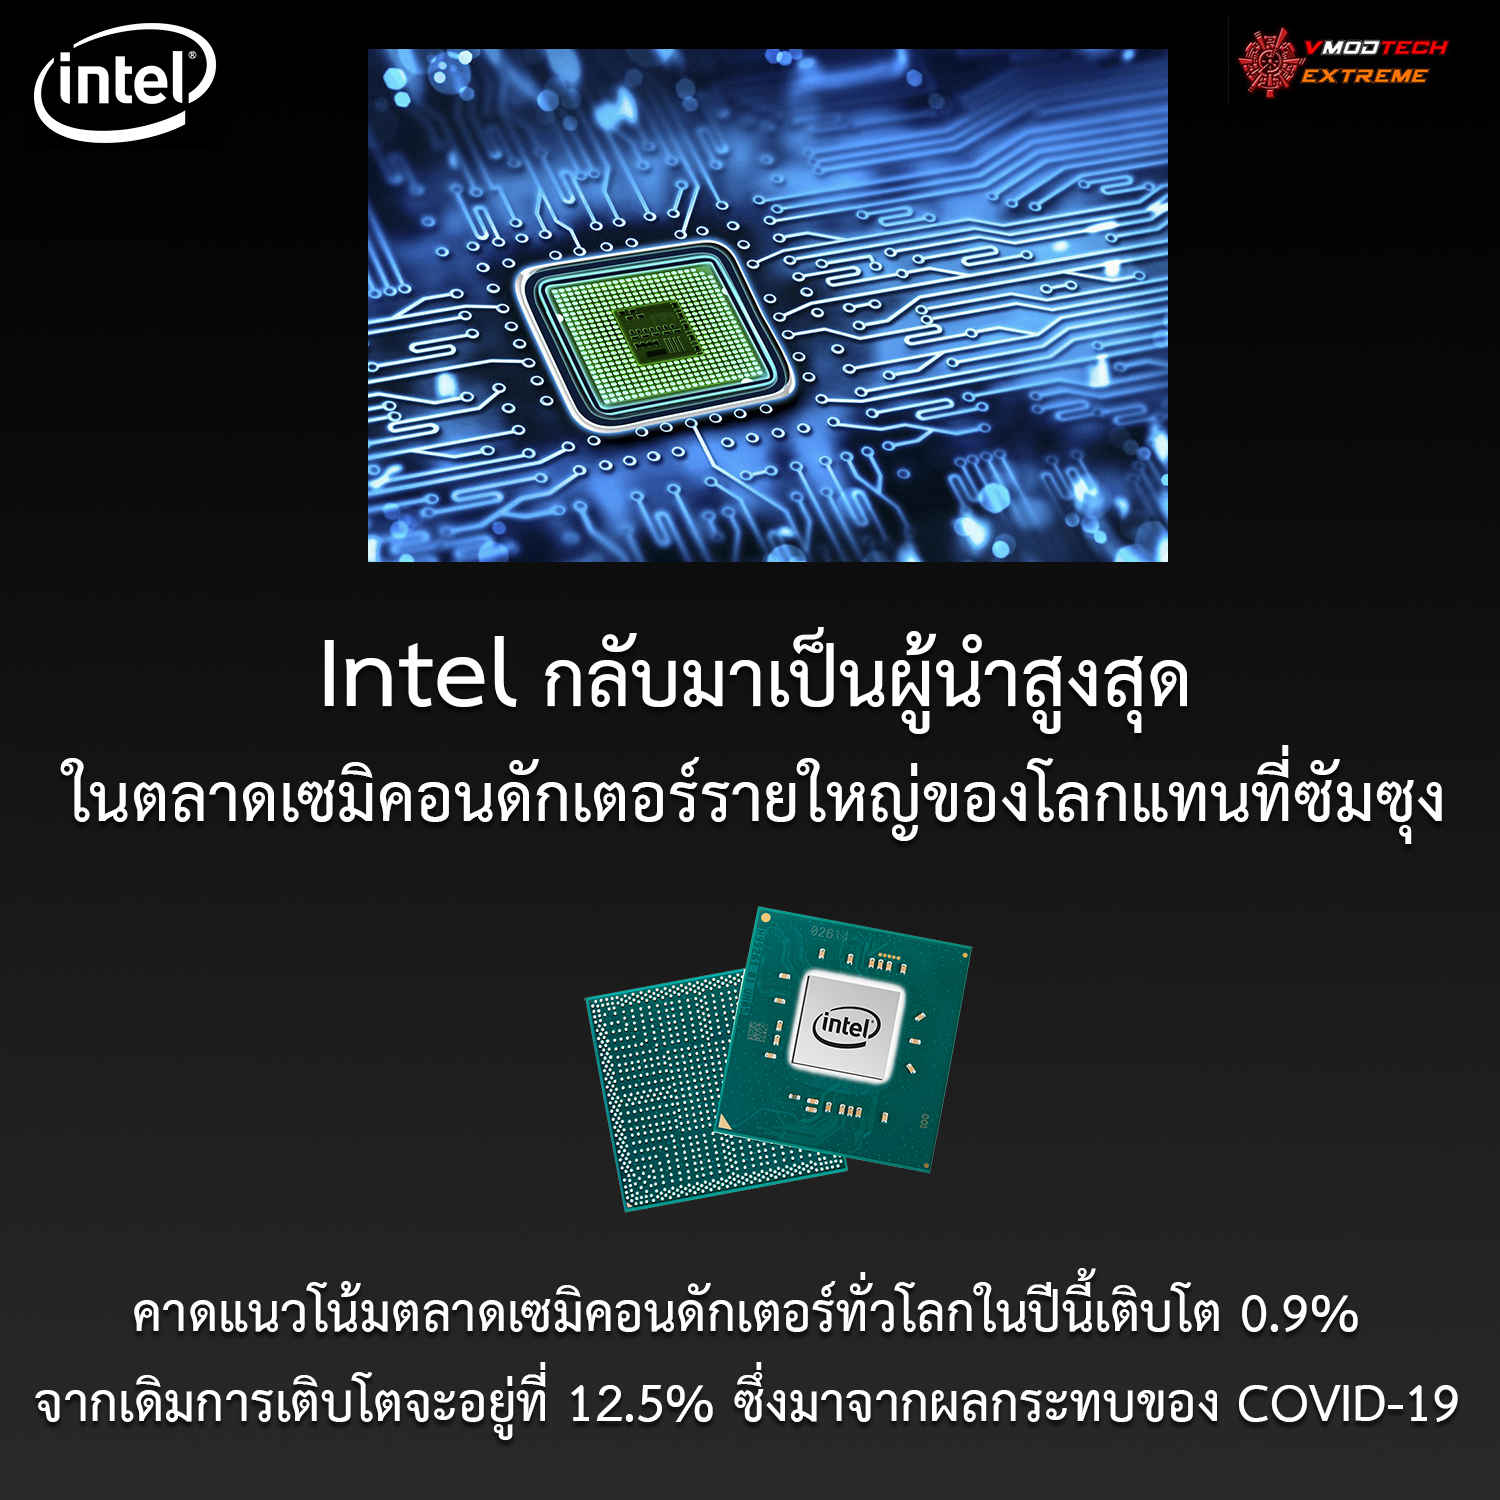 intel top position semiconductor market Intel กลับมาเป็นผู้นำสูงสุดในตลาดเซมิคอนดักเตอร์รายใหญ่ของโลกแทนที่ซัมซุง 